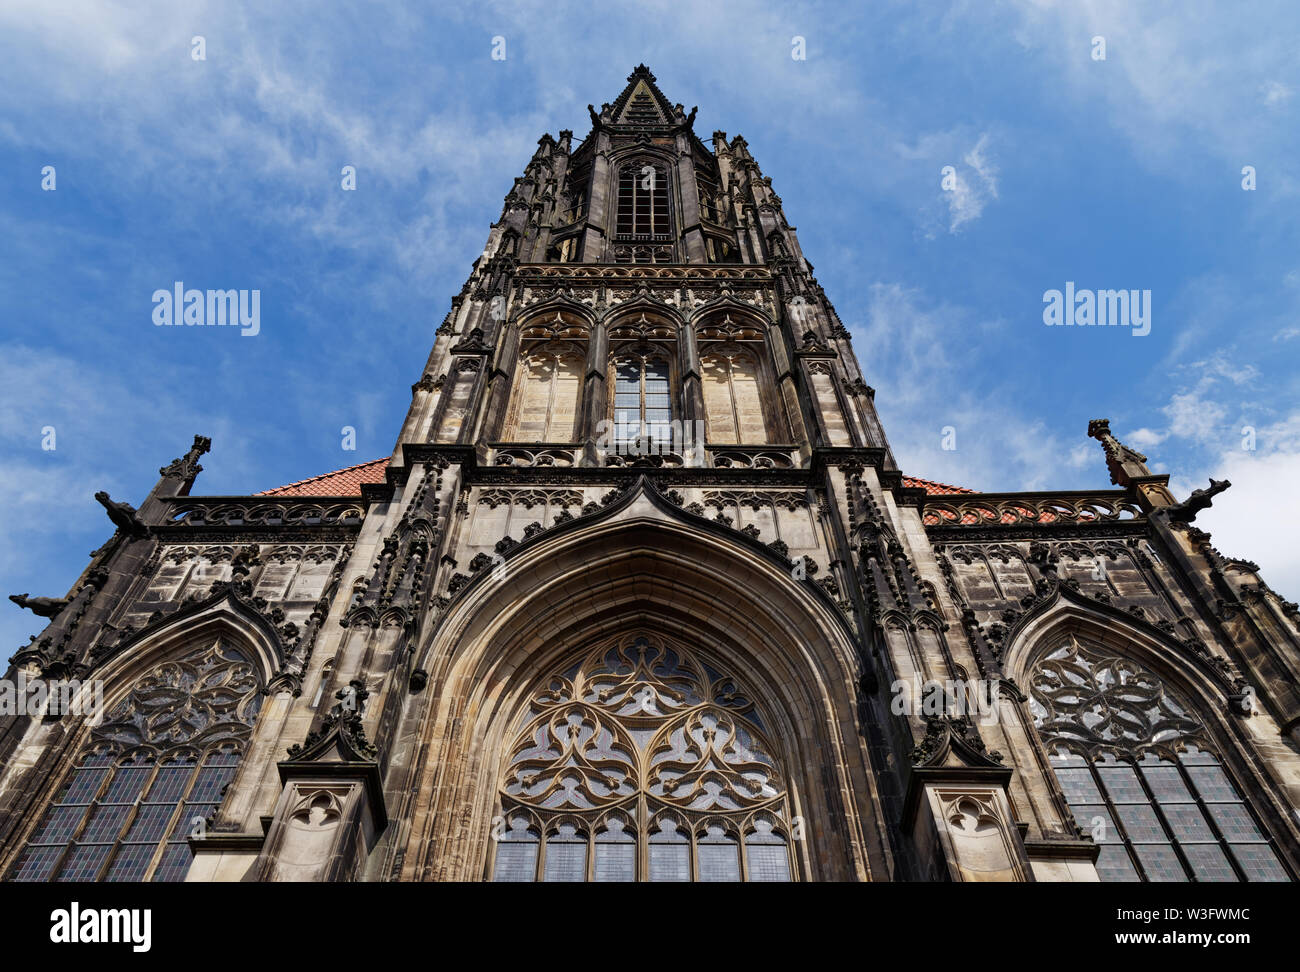 Front facade of St Lambert's Church against blue sky. Muenster, Germany Stock Photo